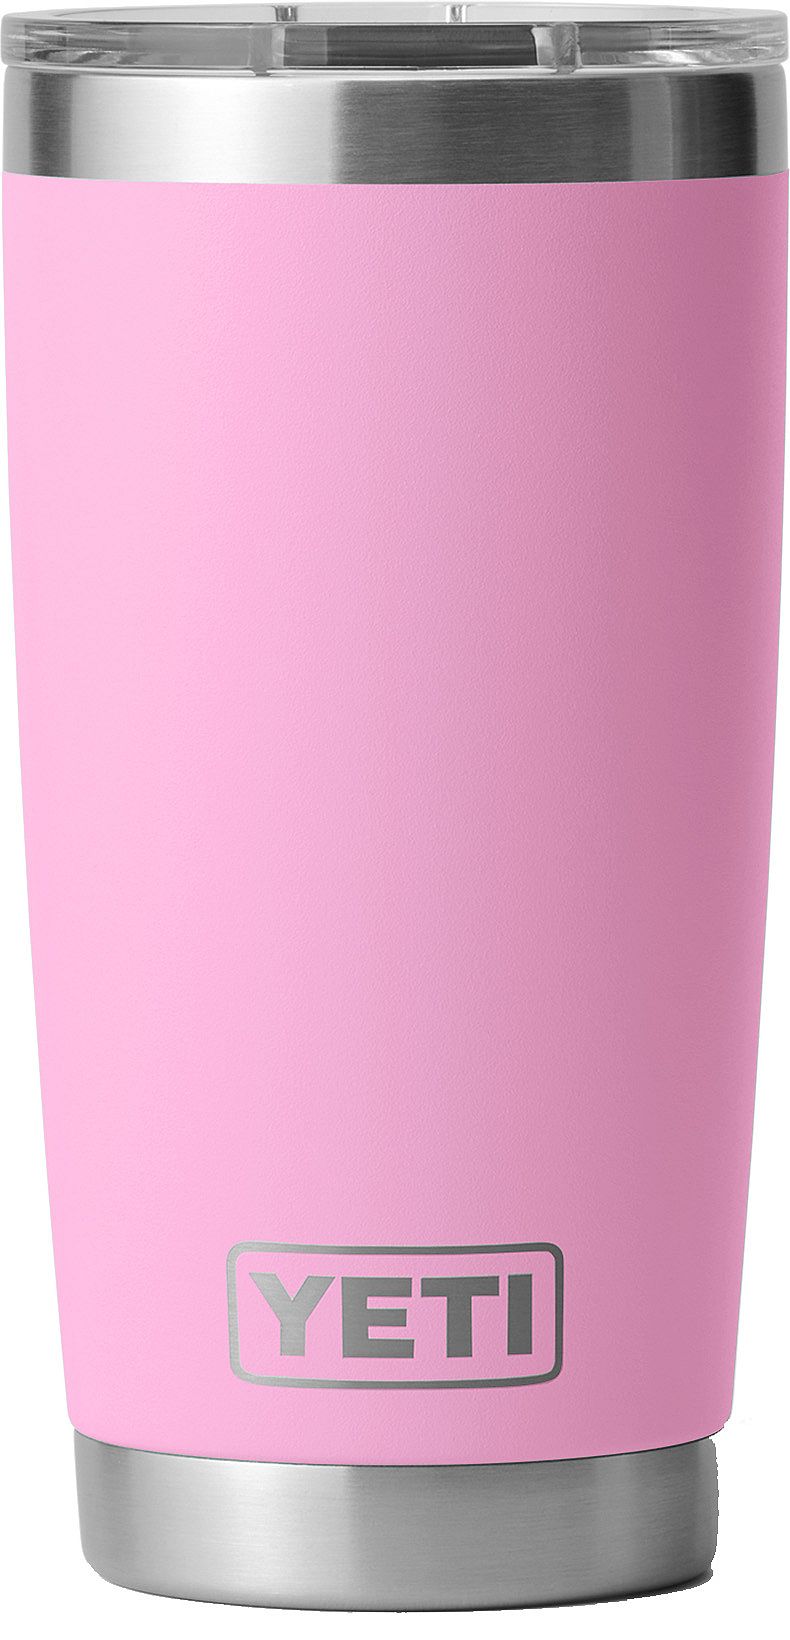 YETI 18 oz. Rambler Bottle in Pink – Country Club Prep